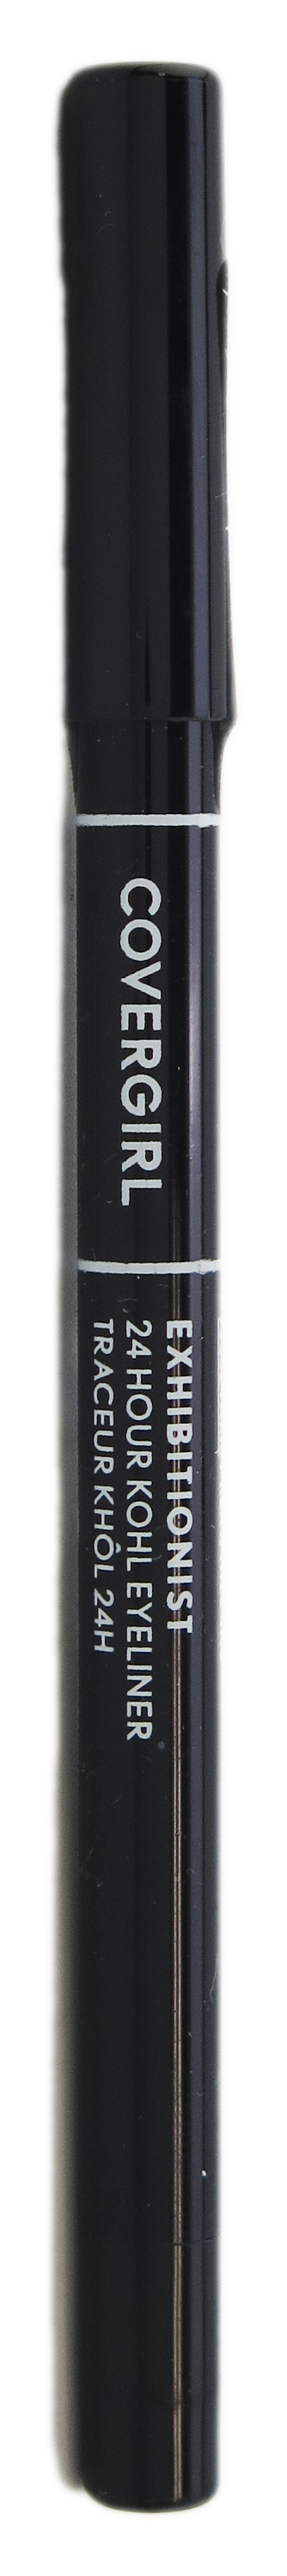 CoverGirl Exhibitionist Kohl Eyeliner Pencil - Assorted